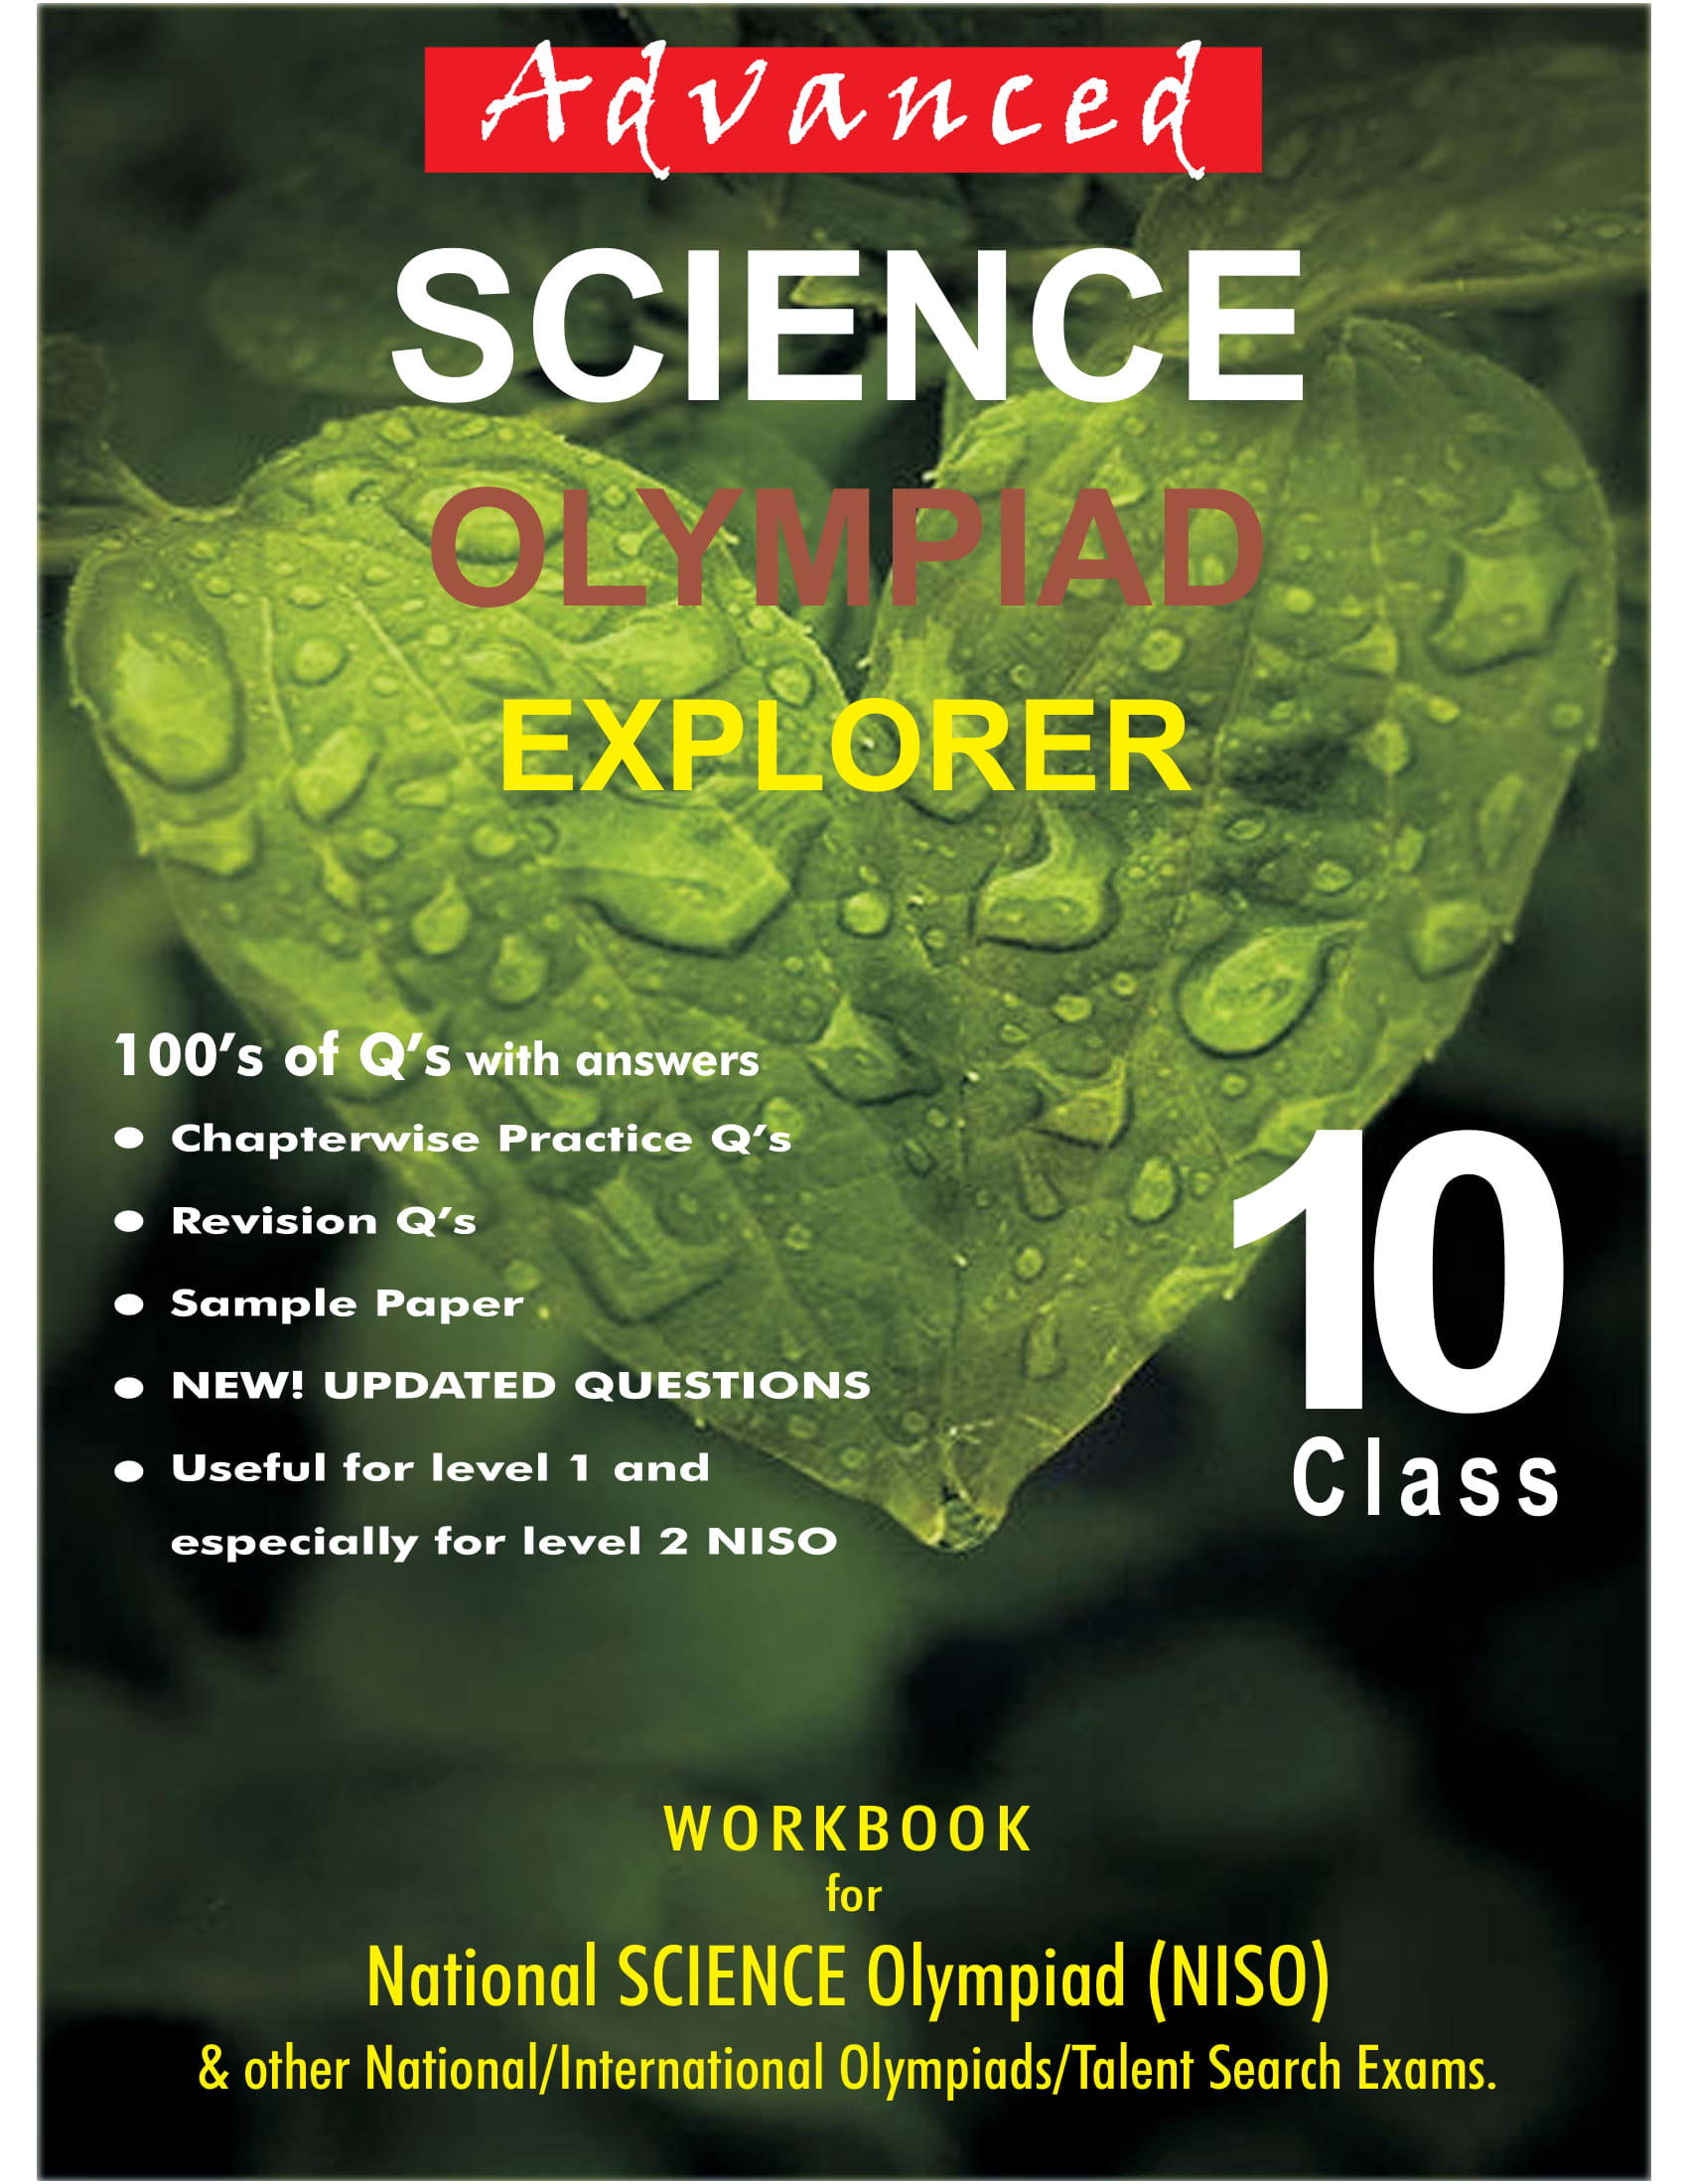 ADVANCED SCIENCE EXPLORER CLASS-10